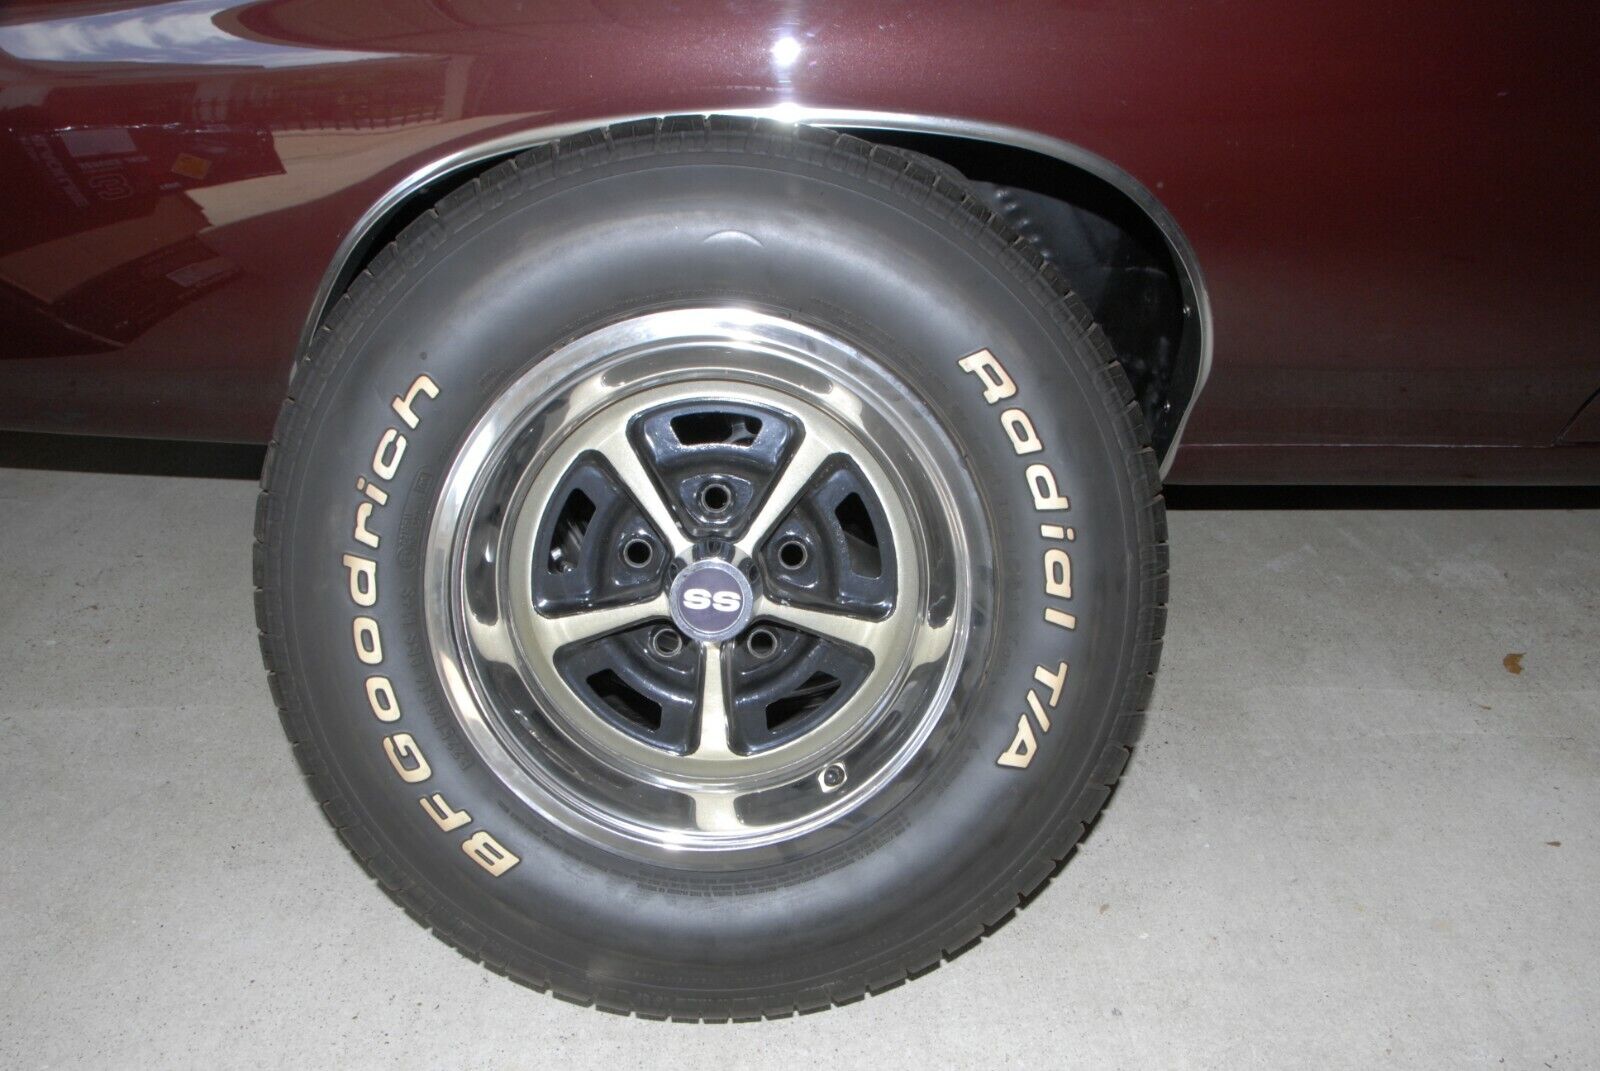 1969-70 Chevelle,Camaro,Nova, SS396 14X7 Wheels, with trim rings, caps and lugs